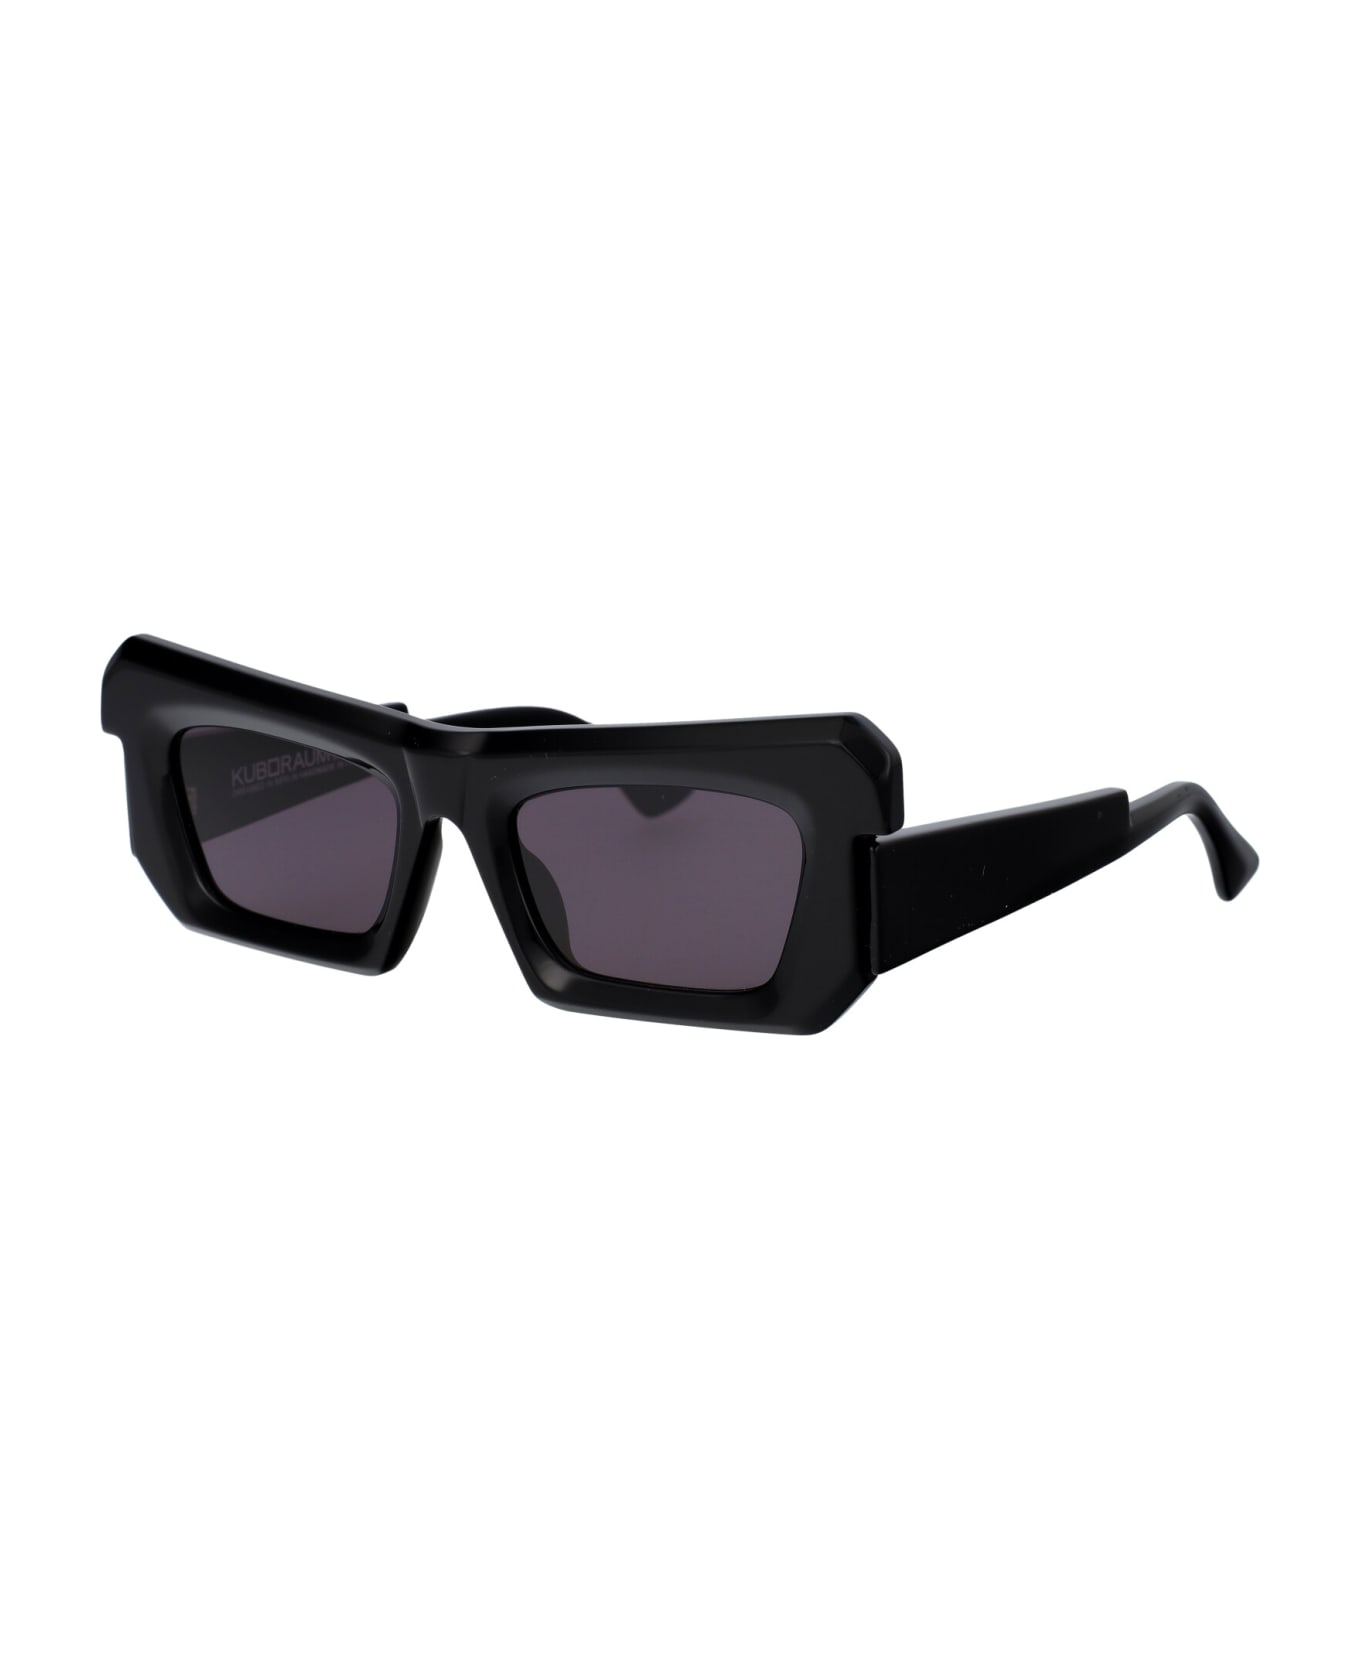 Kuboraum Maske R2 Sunglasses - BS CT 2grey サングラス